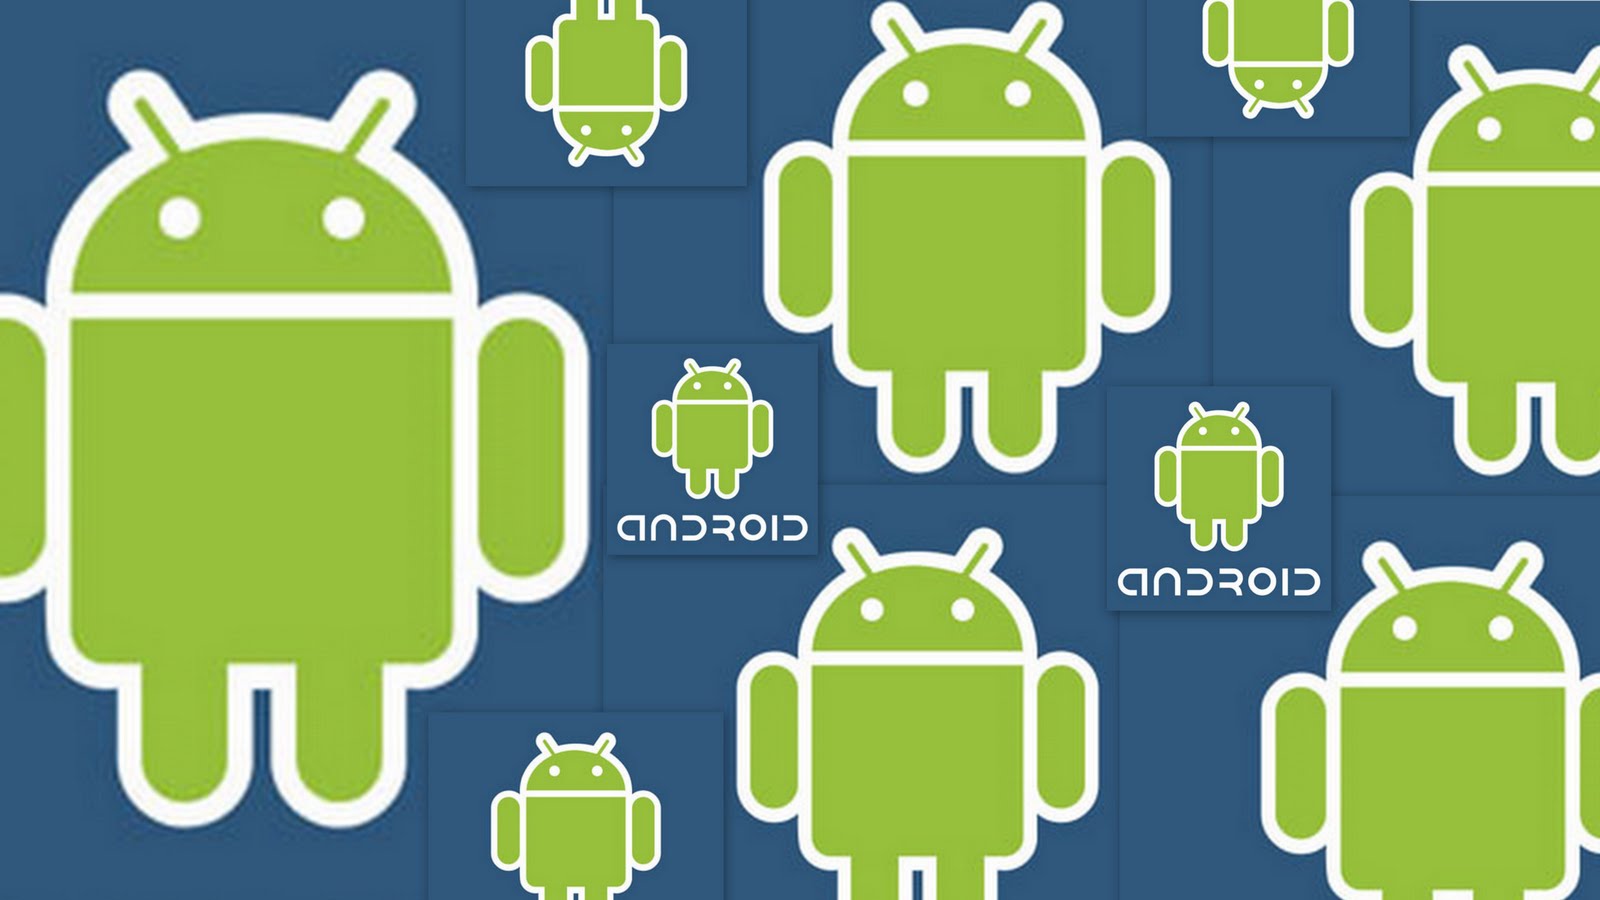 WALLPAPER ANDROID IPHONE Gambar Wallpaper Android Keren 